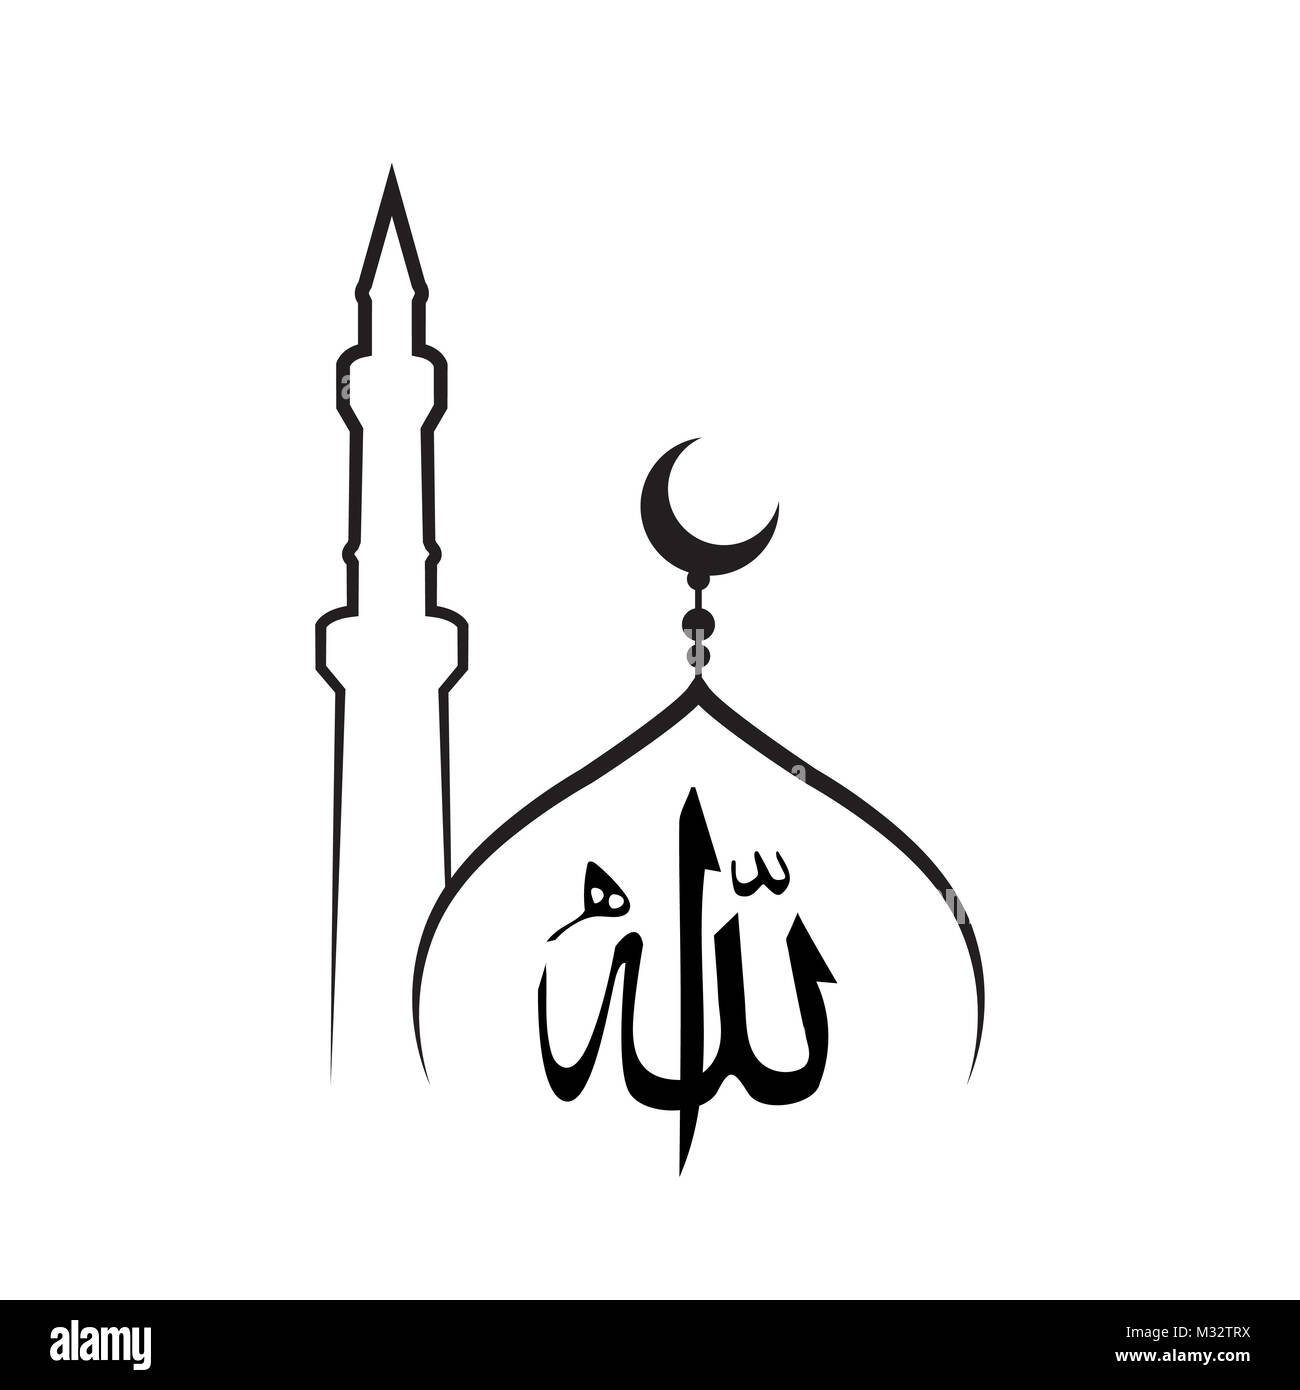 allah god of Islam Stock Photo - Alamy